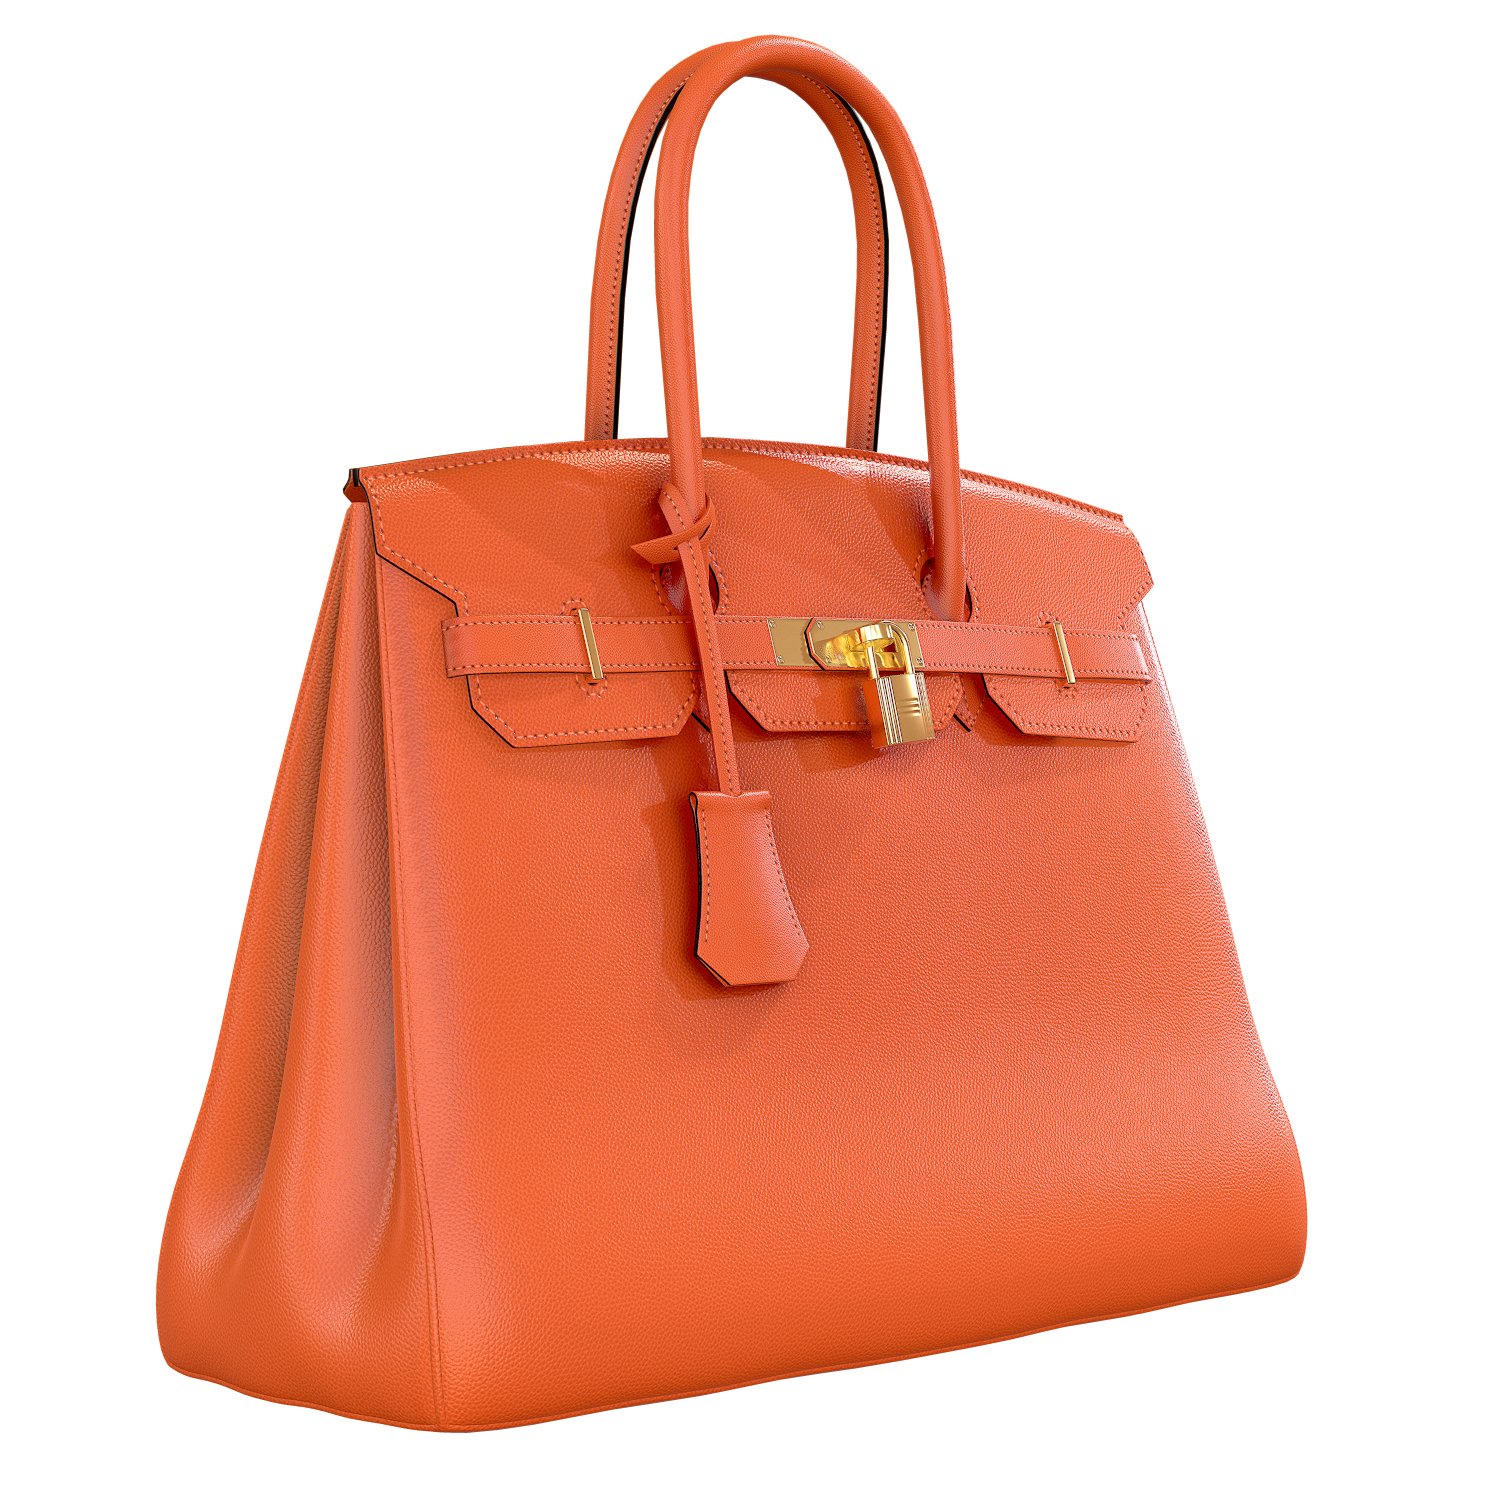 orange birkin bag - Google Search  Hermes bag birkin, Hermes birkin, Birkin